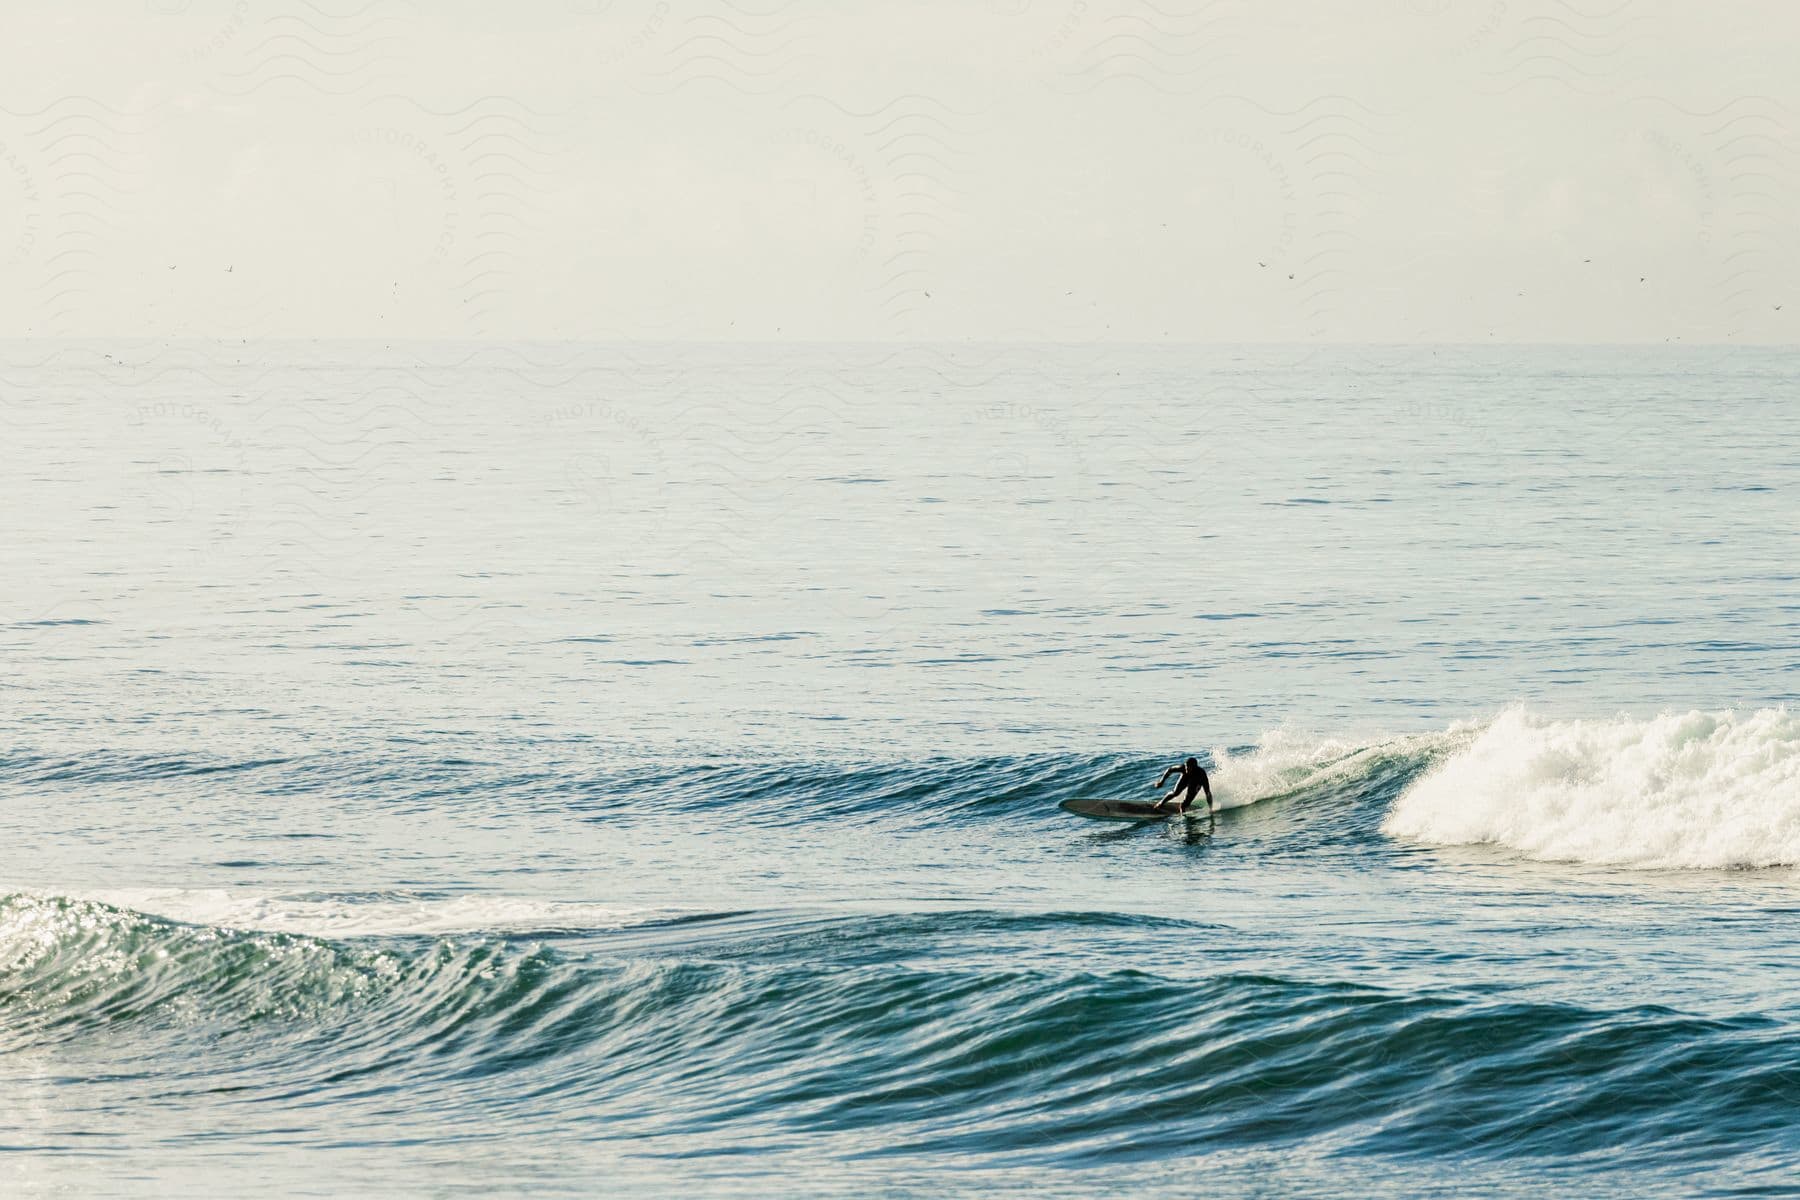 An adult surfs an ocean wave on a cloudy day.